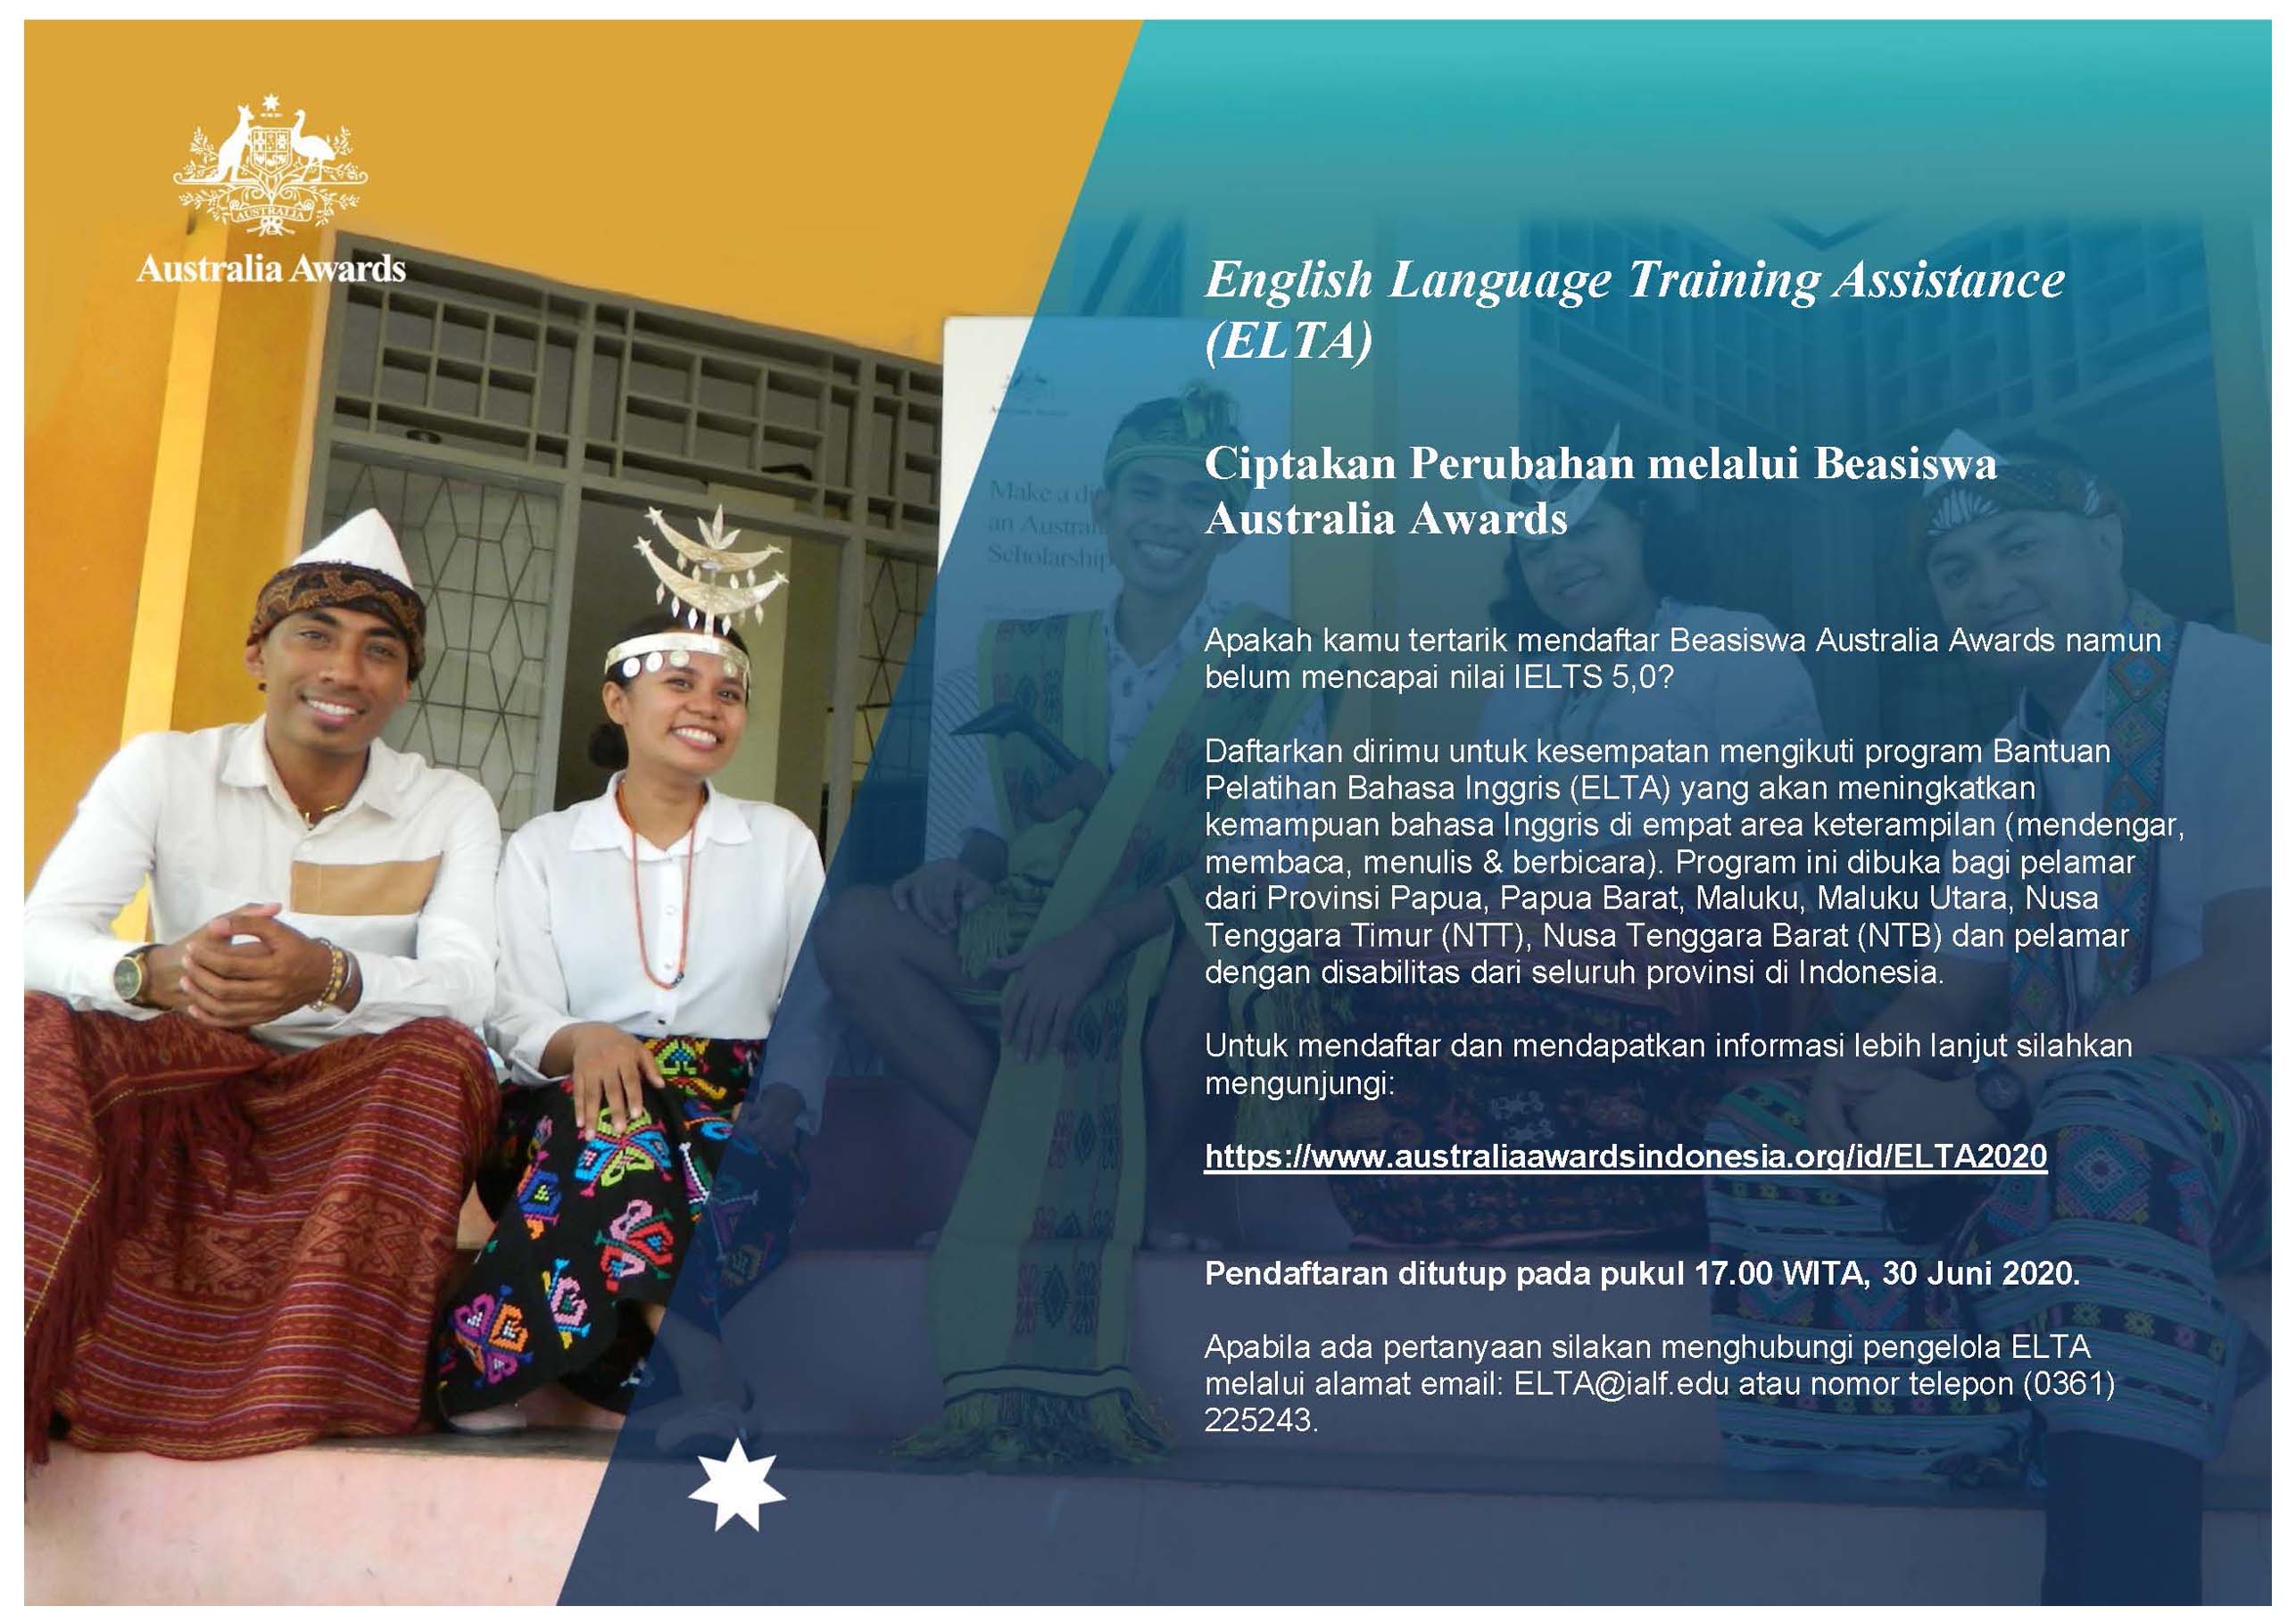  Deadline for English Language Training Assistance Extended until 30 June 2020